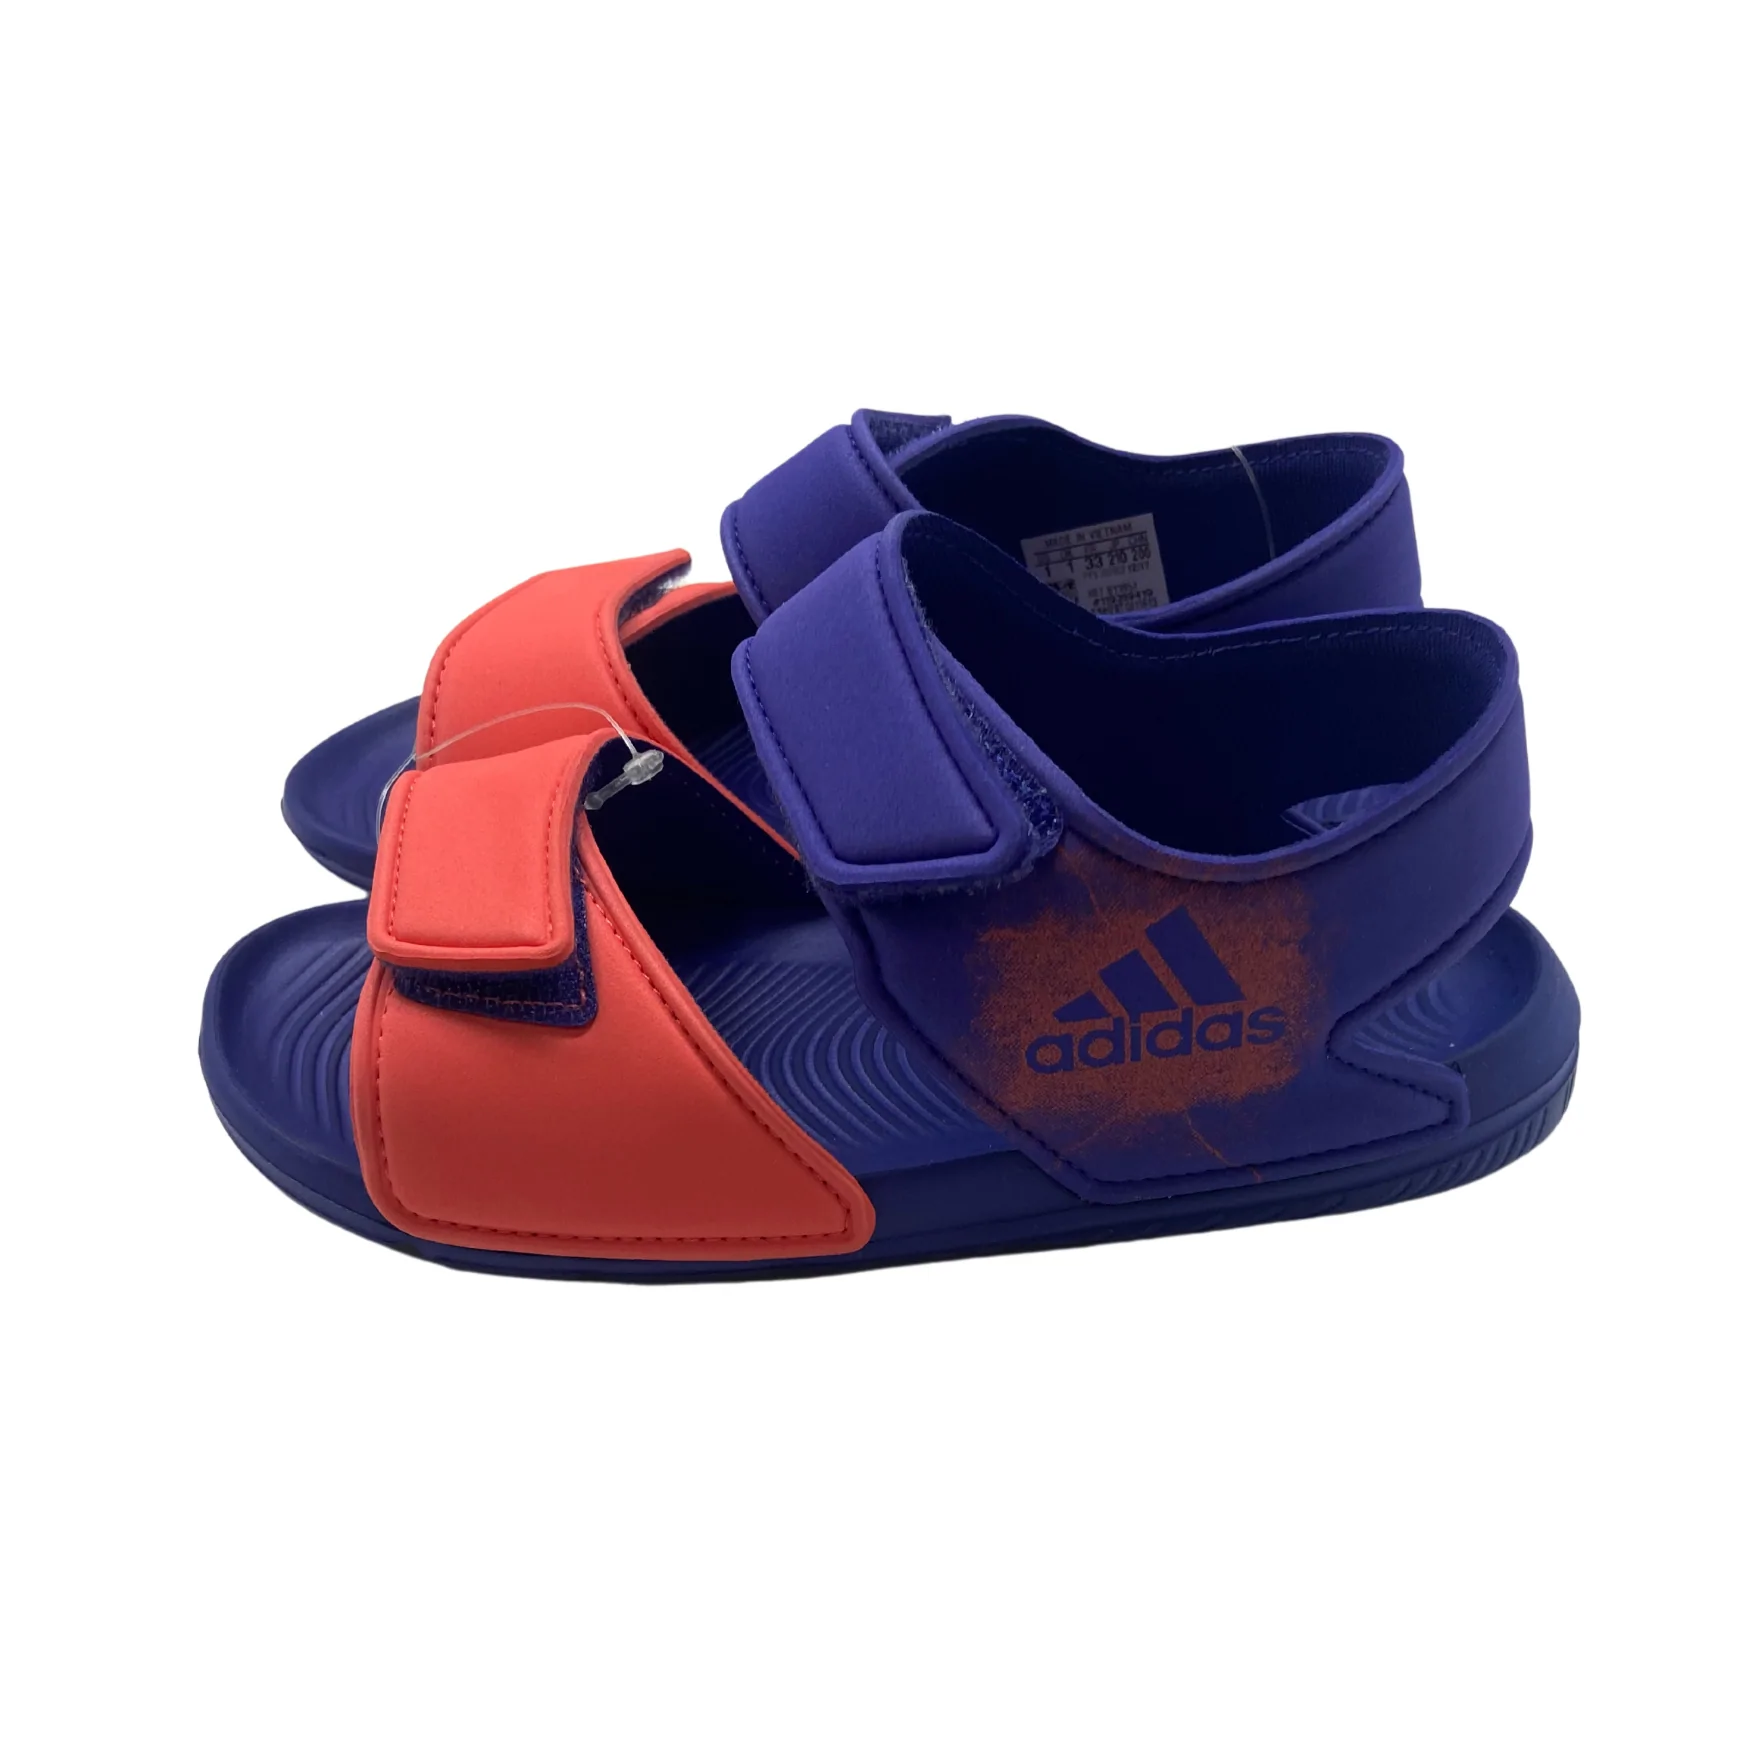 Adidas: Kids Sandals / AltaSwim C / Boy's / Girl's / Purple / Coral / Size 13